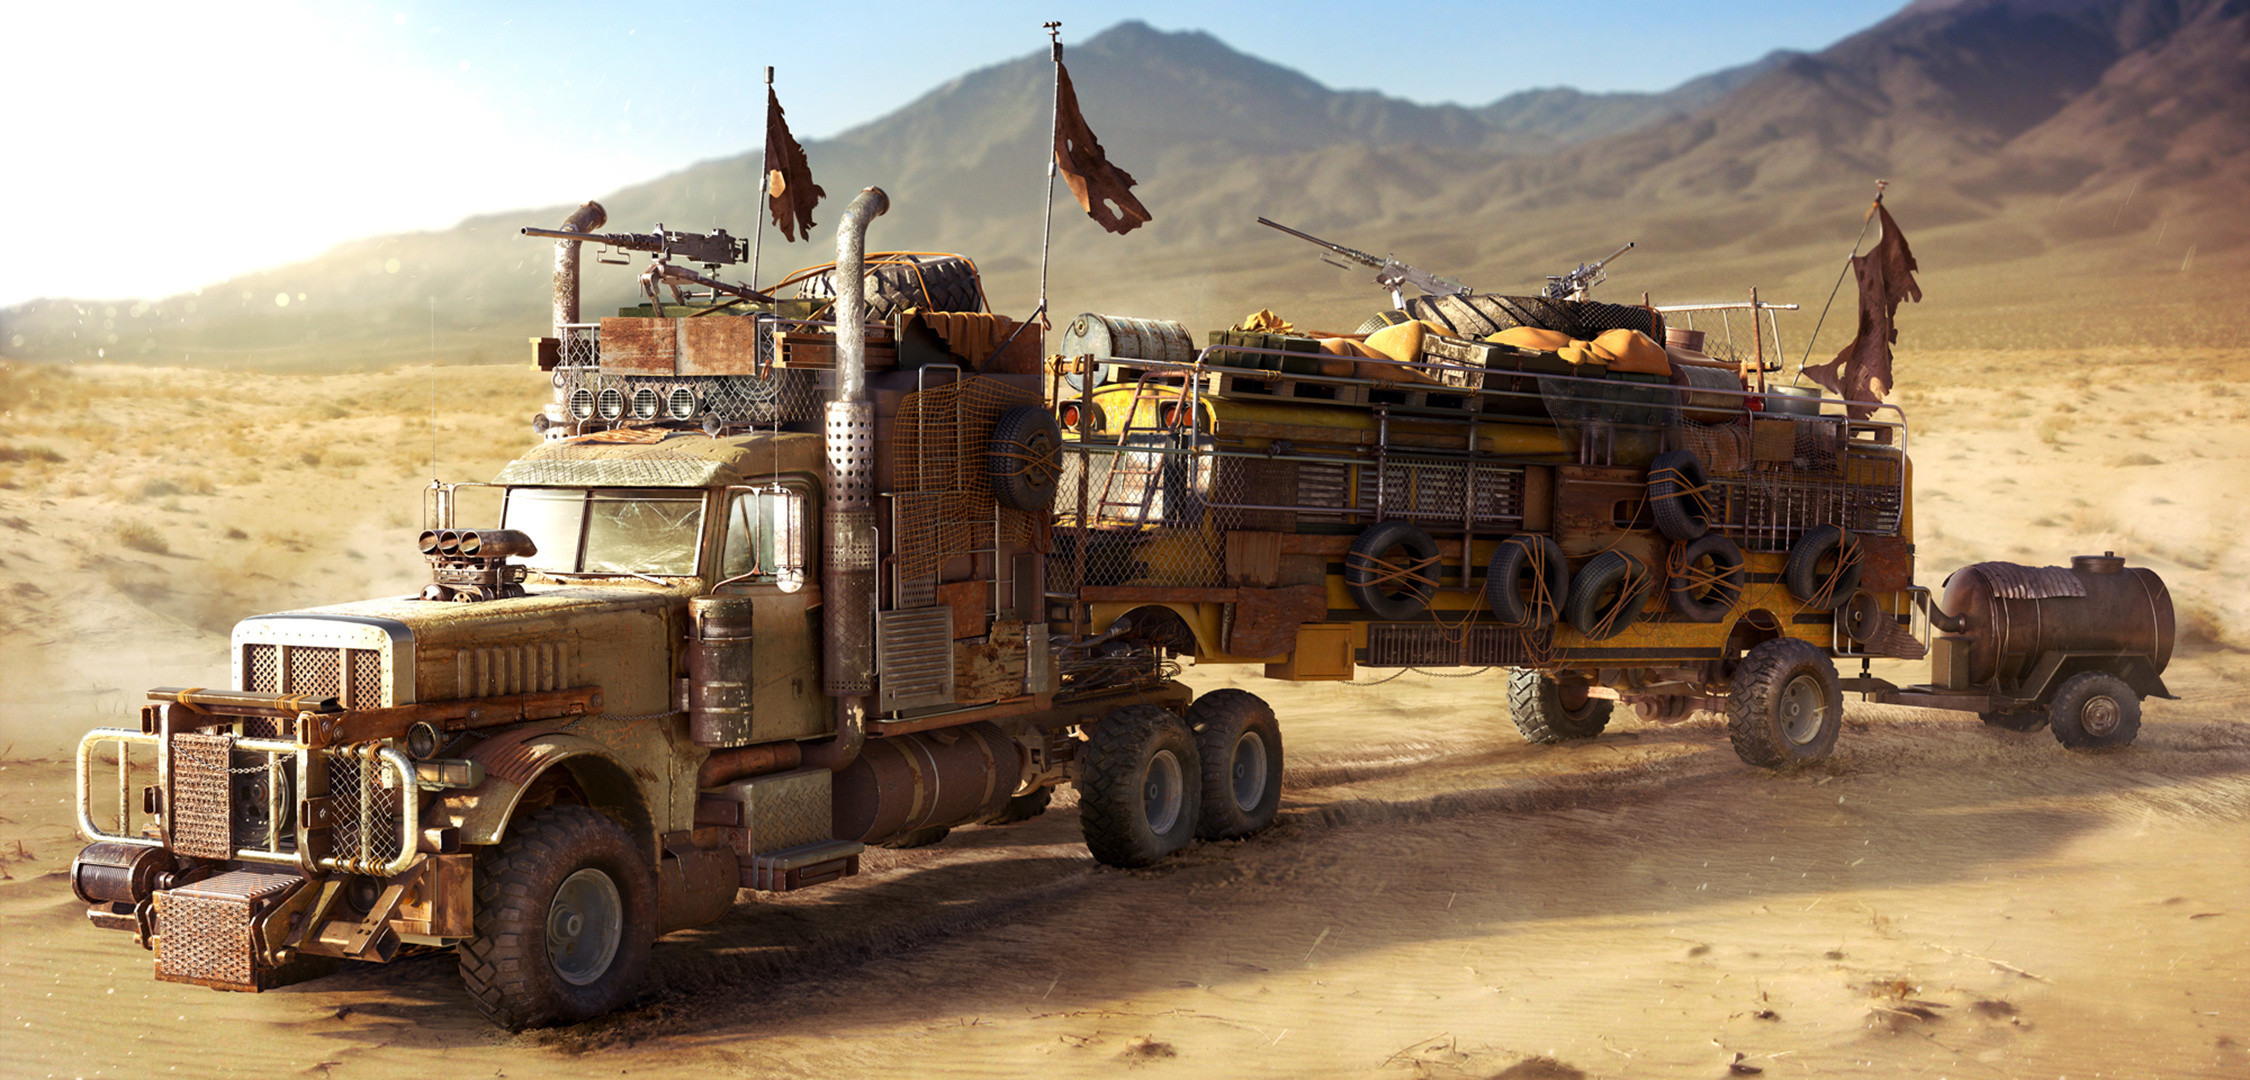 fallout, school bus, truck, wasteland, desert, postapocalyptic, desert, bus